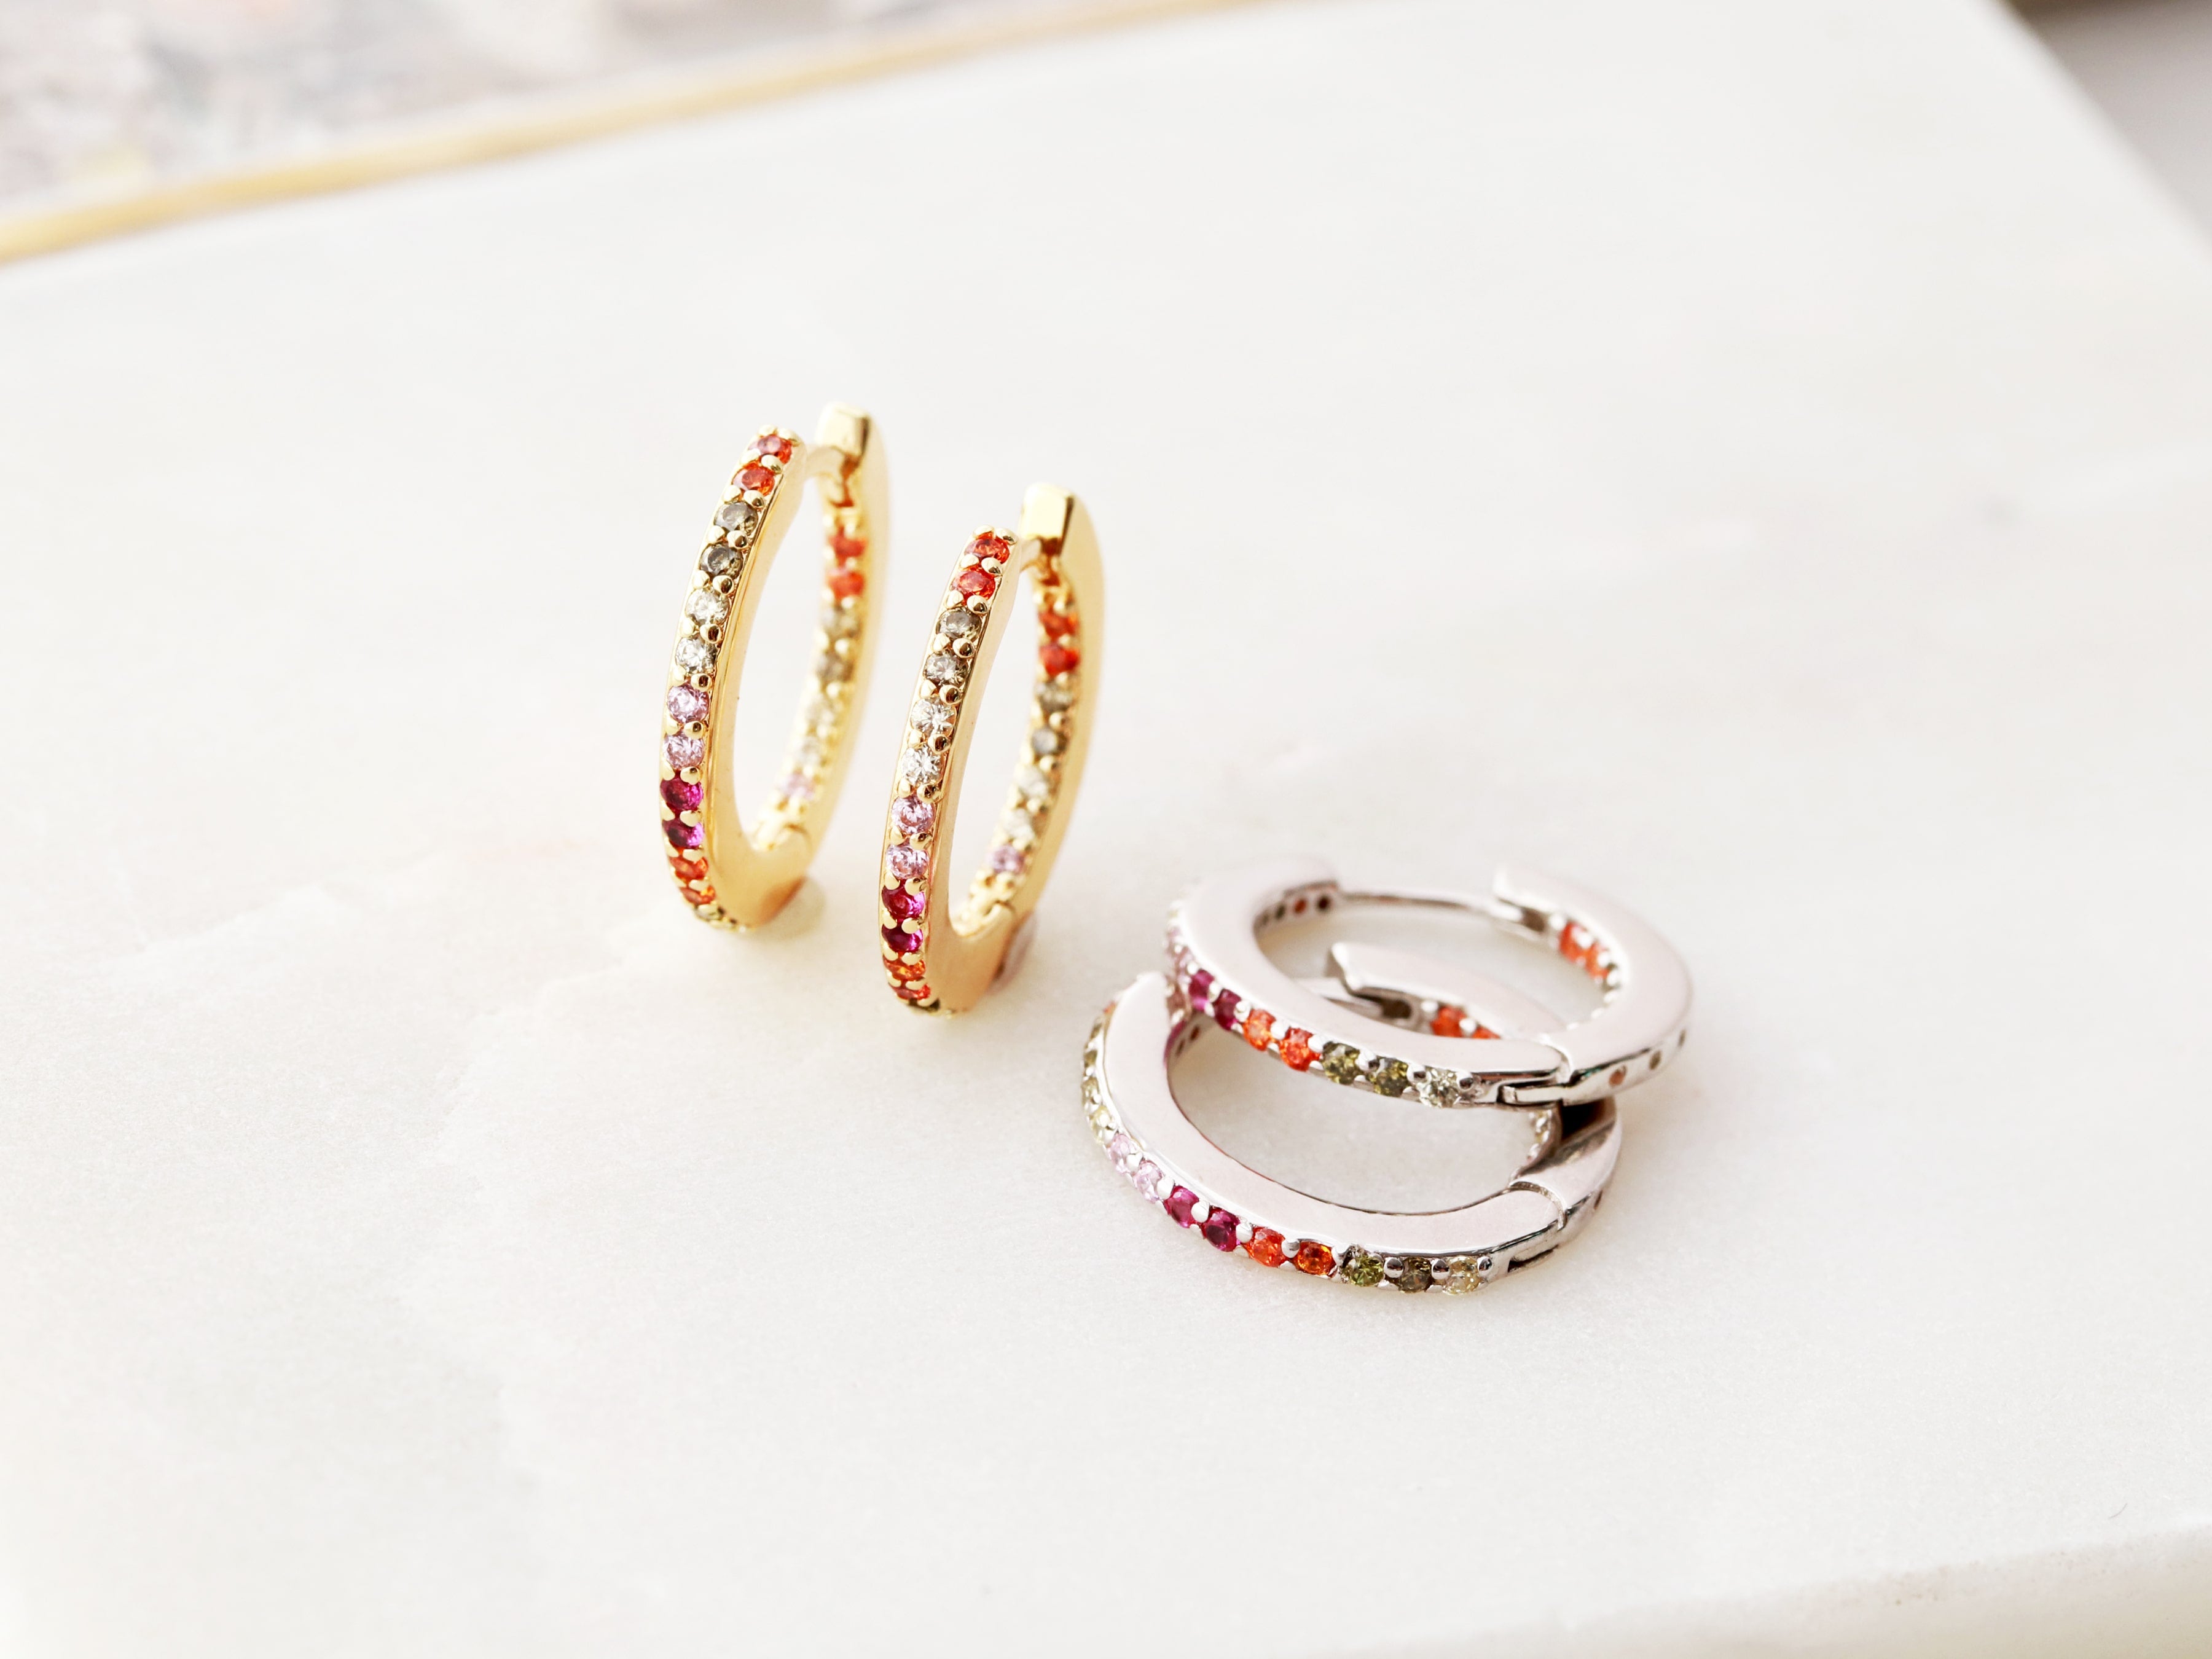 Morpankh design earrings with adjustable finger ring, Beautiful Earing set.